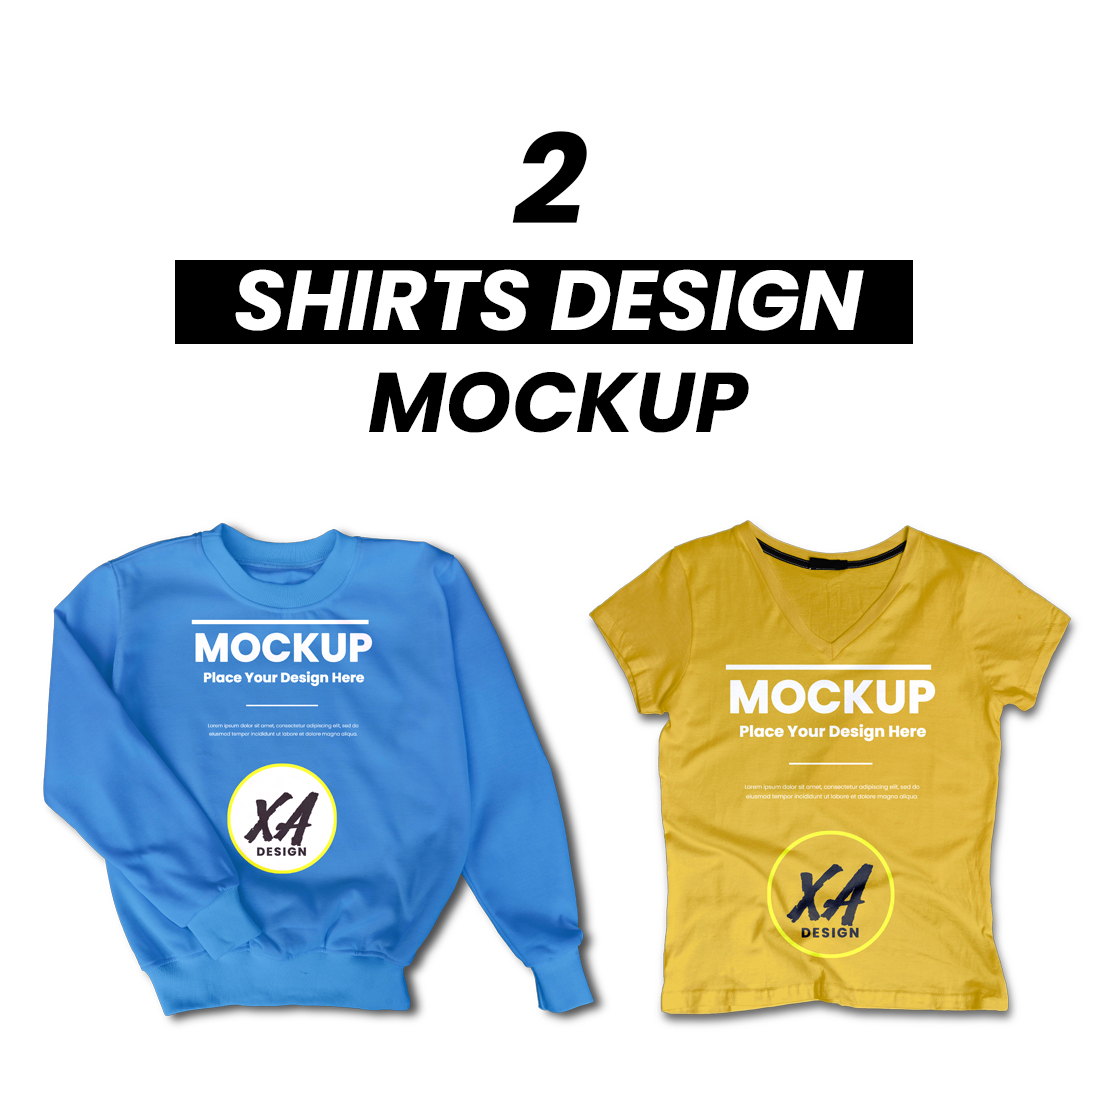 2 Shirts Design For Mockup cover image.